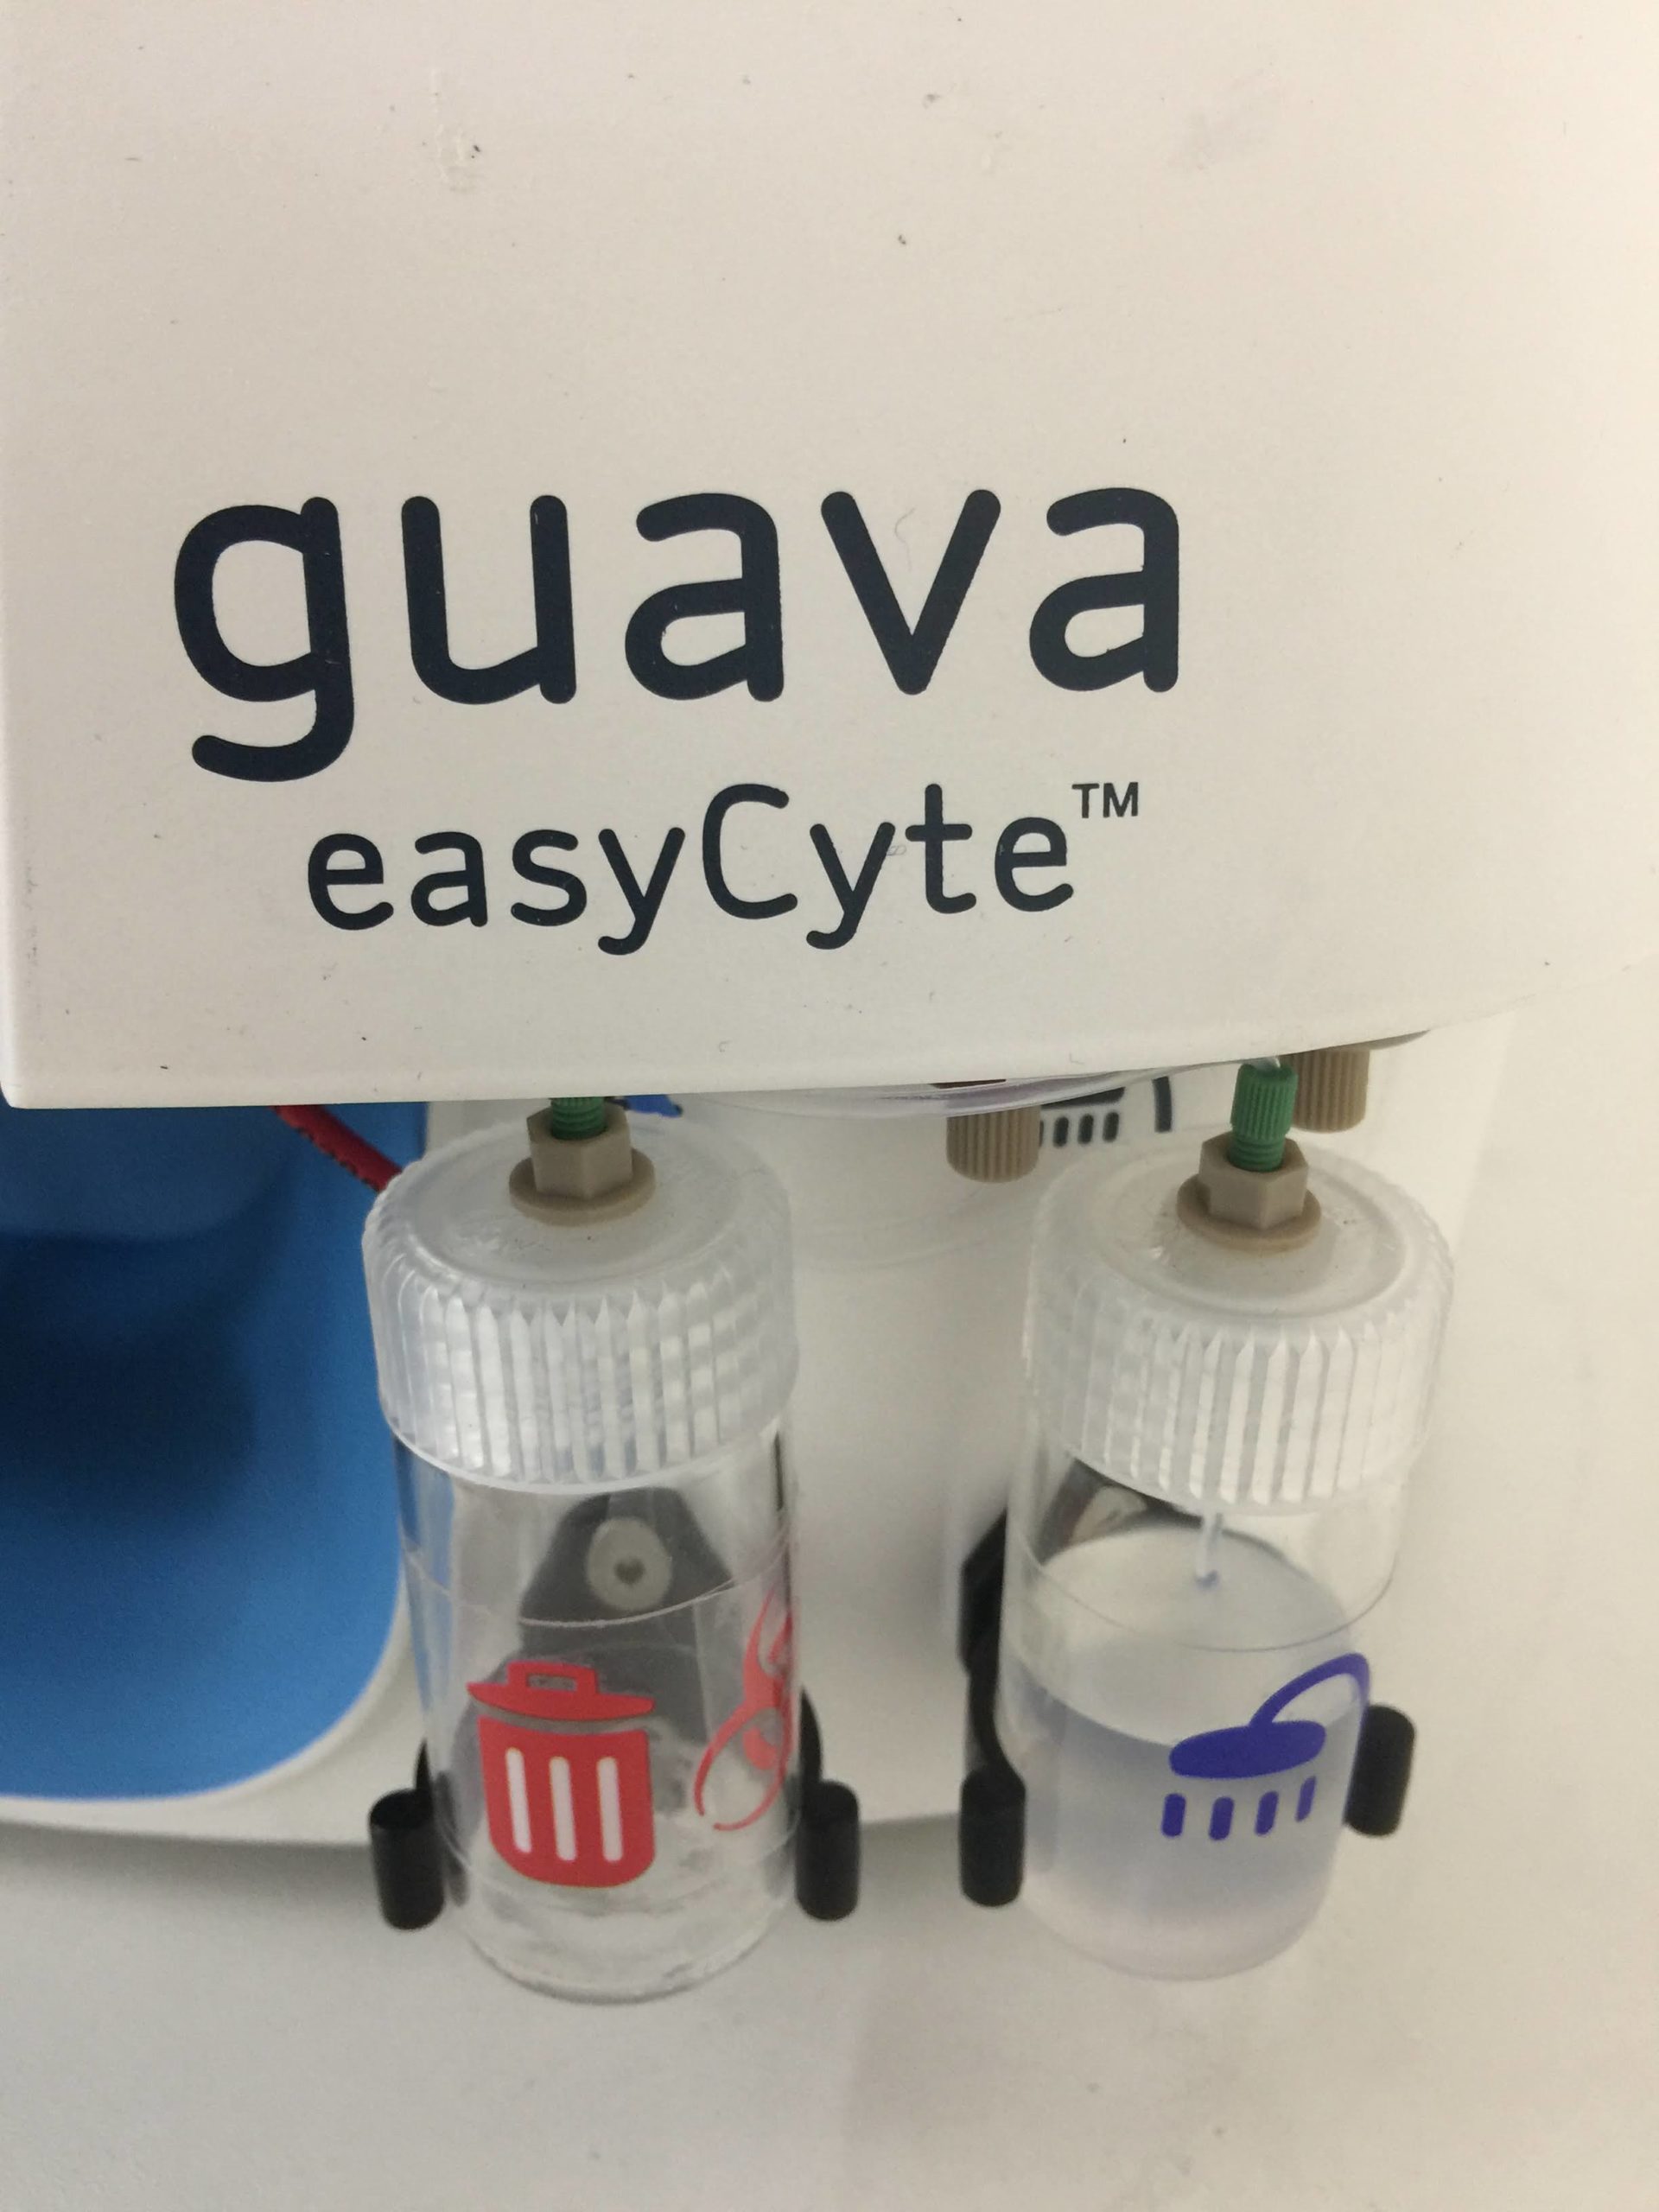 millipore guava easycyte flow cytometer